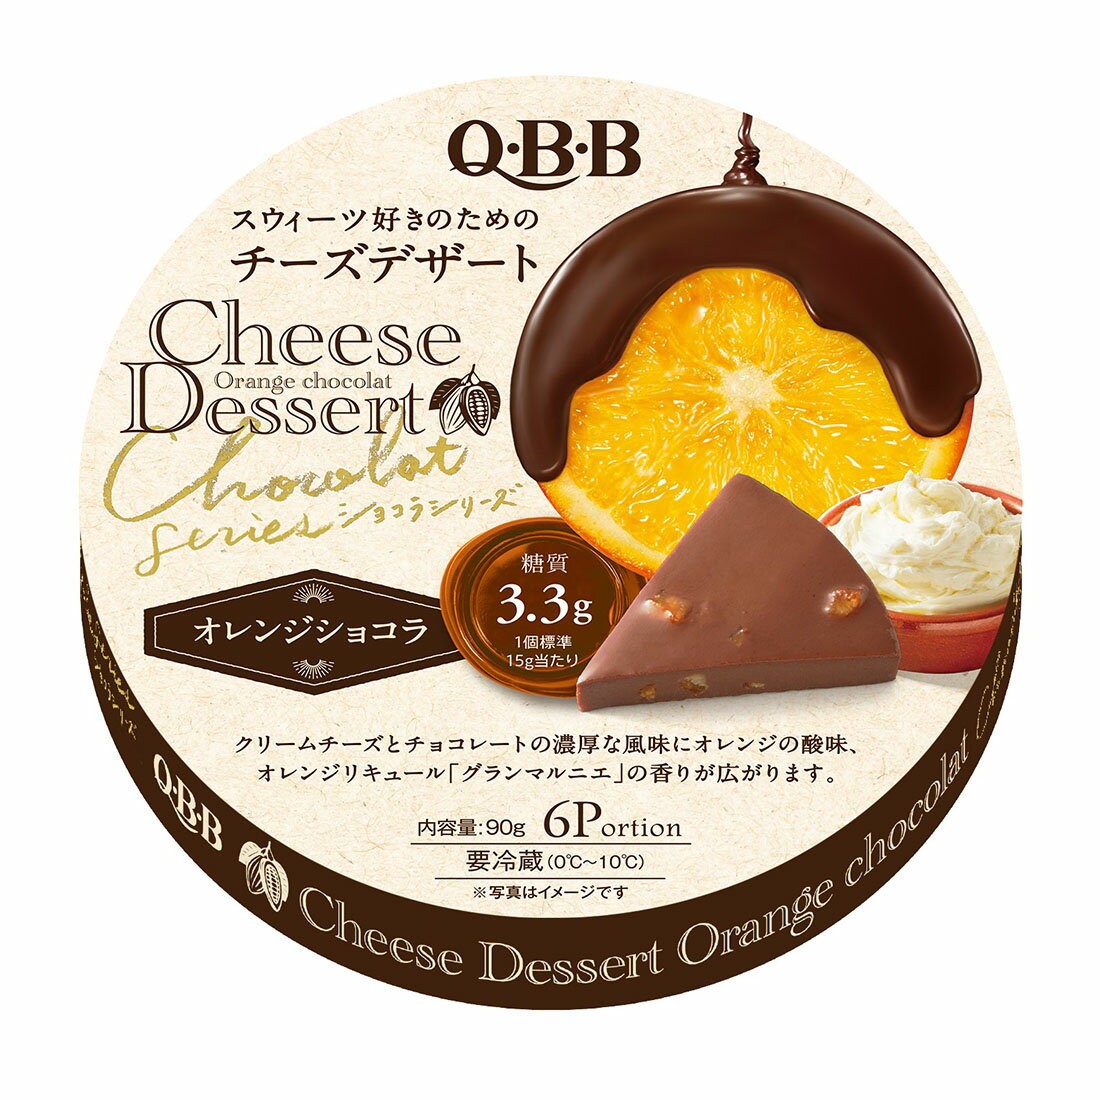 qbb-cheese-dessert-orange-chocolate-flavor